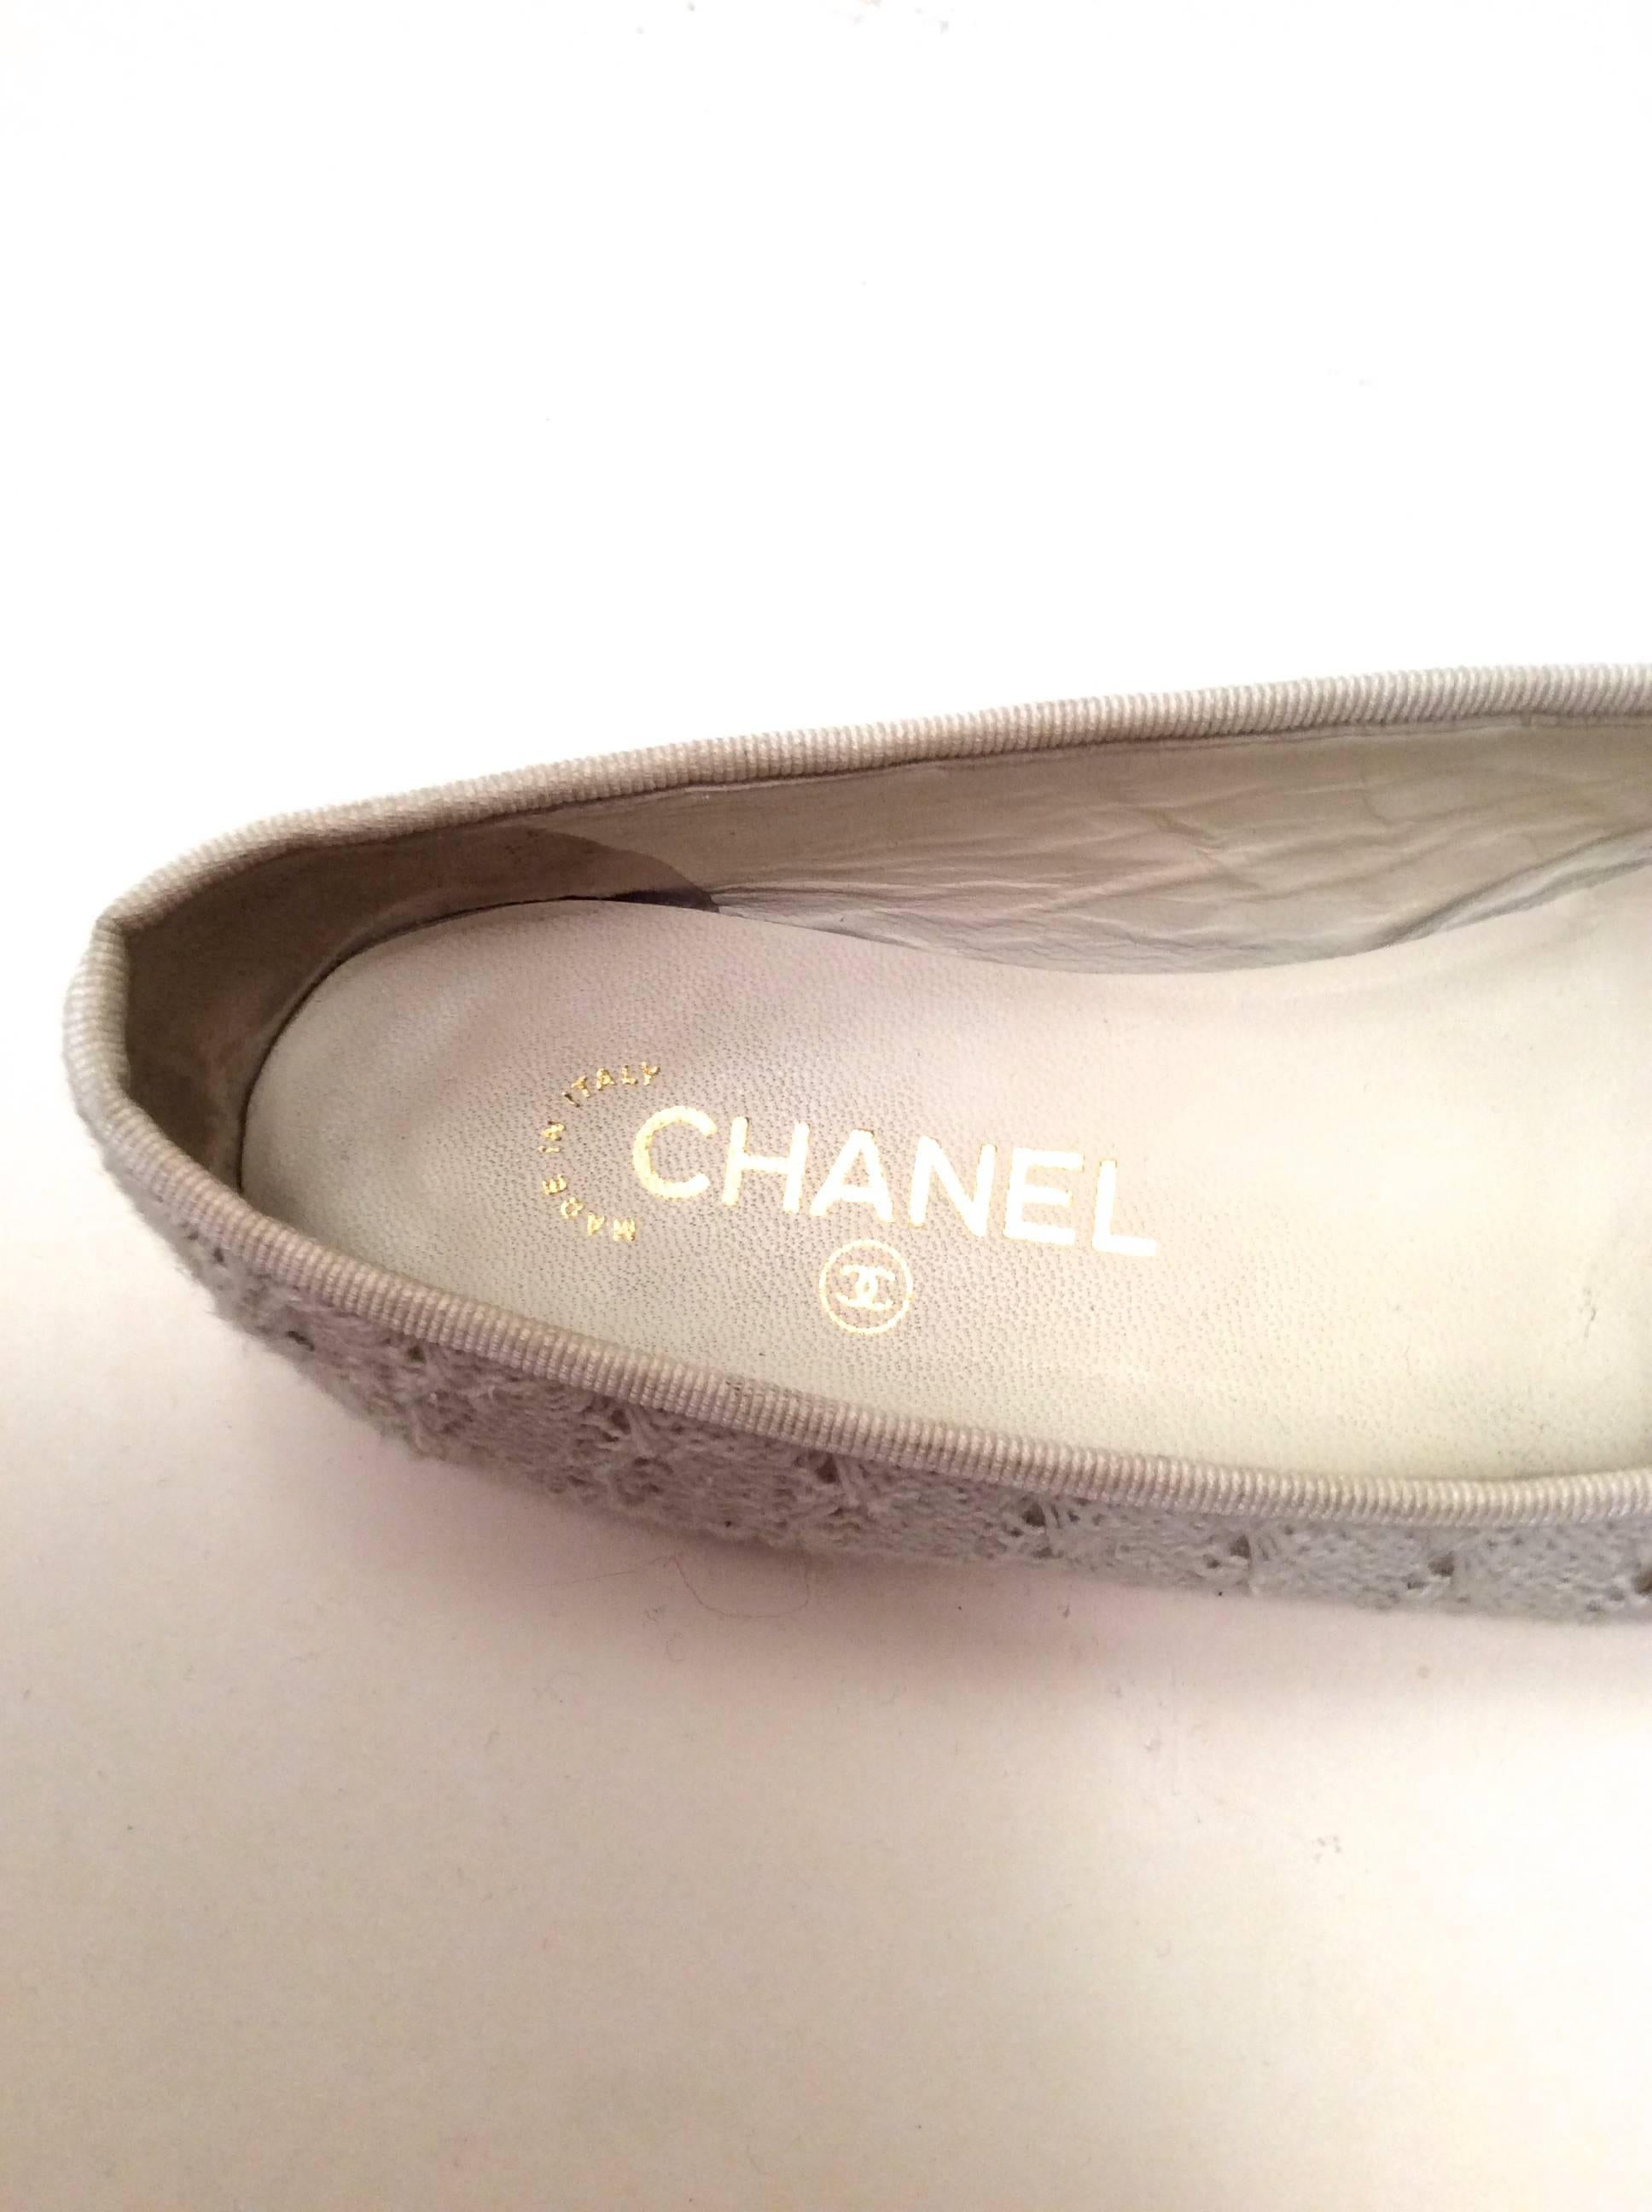 Beige Chanel Ballerina Flats - Size 38 